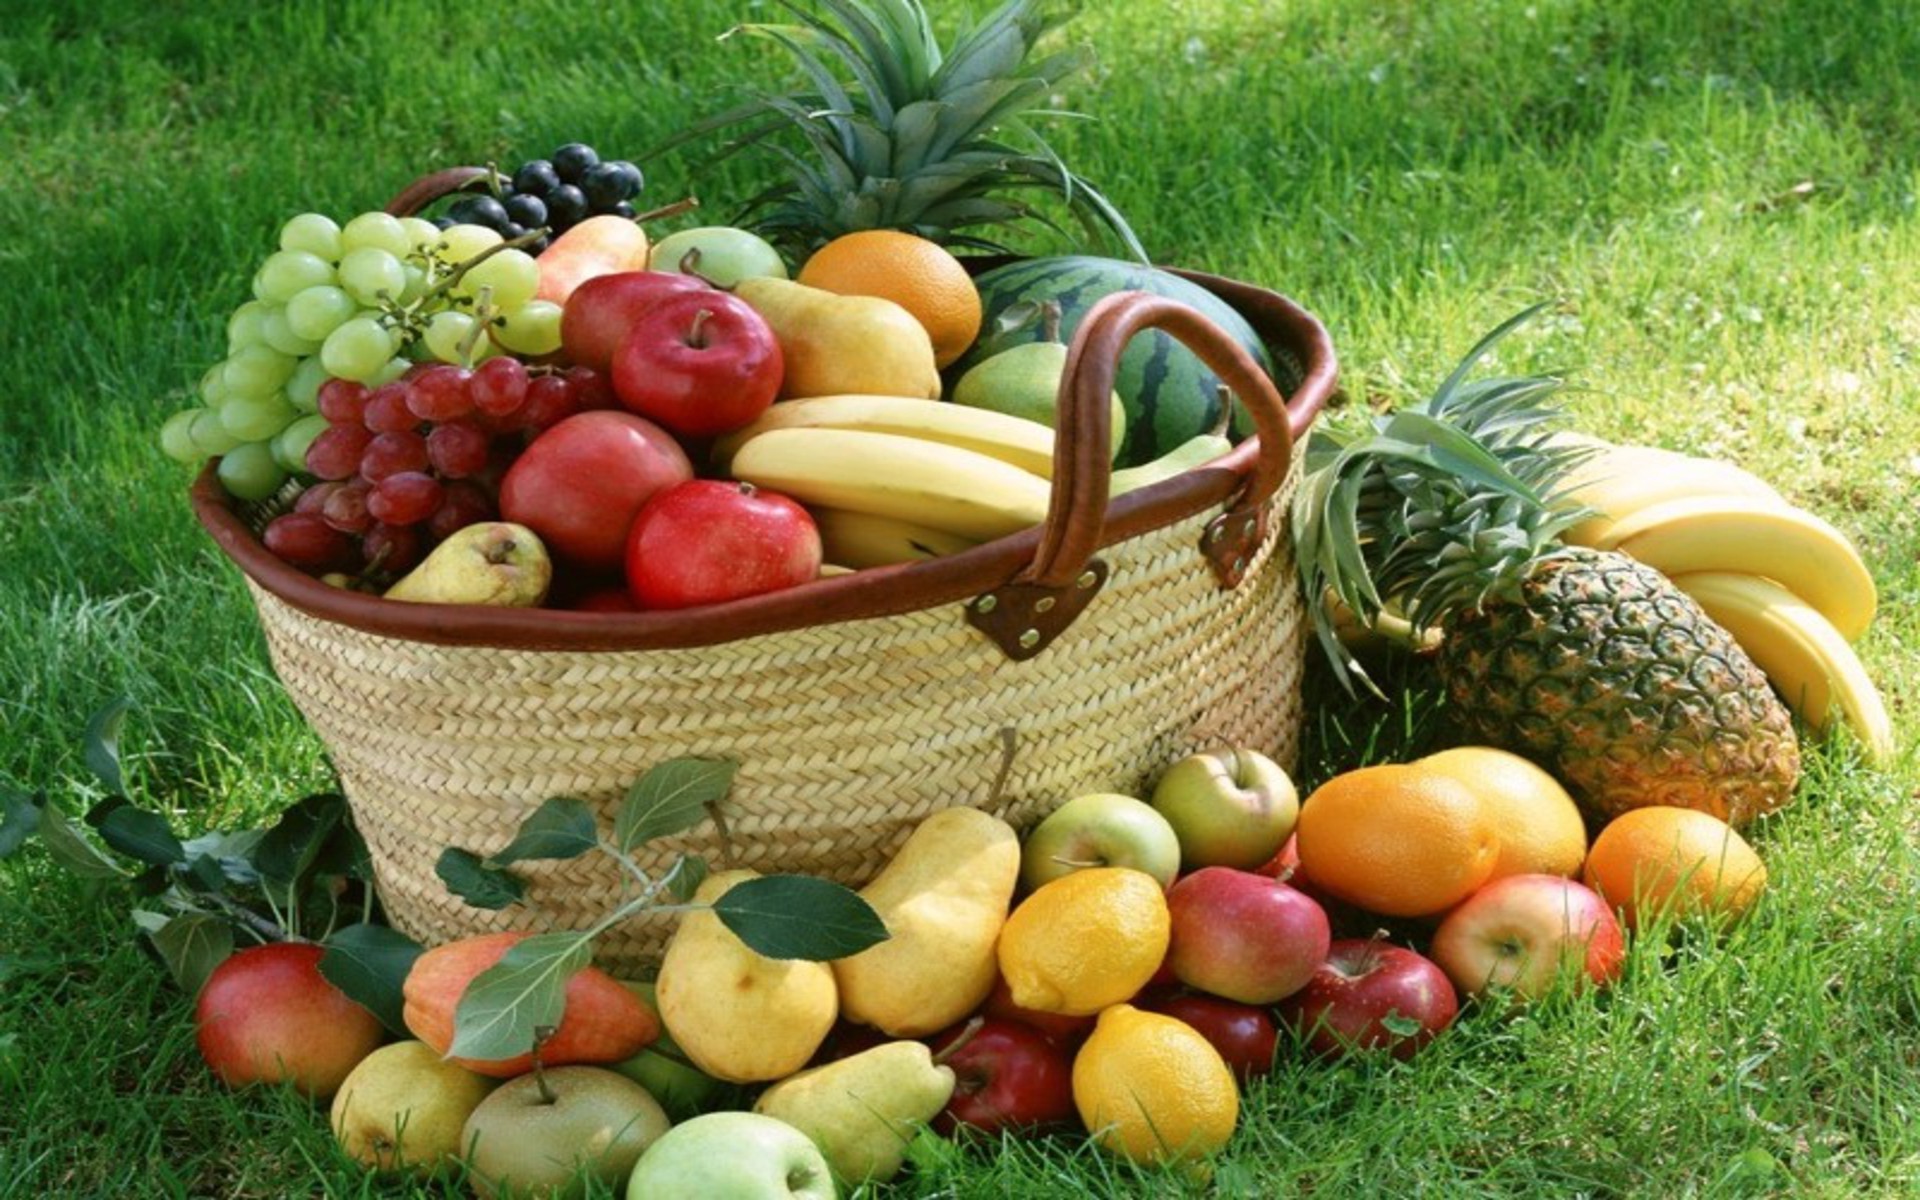 baskets, Grapes, Apples, Grass, Bananas, Lemons Wallpaper